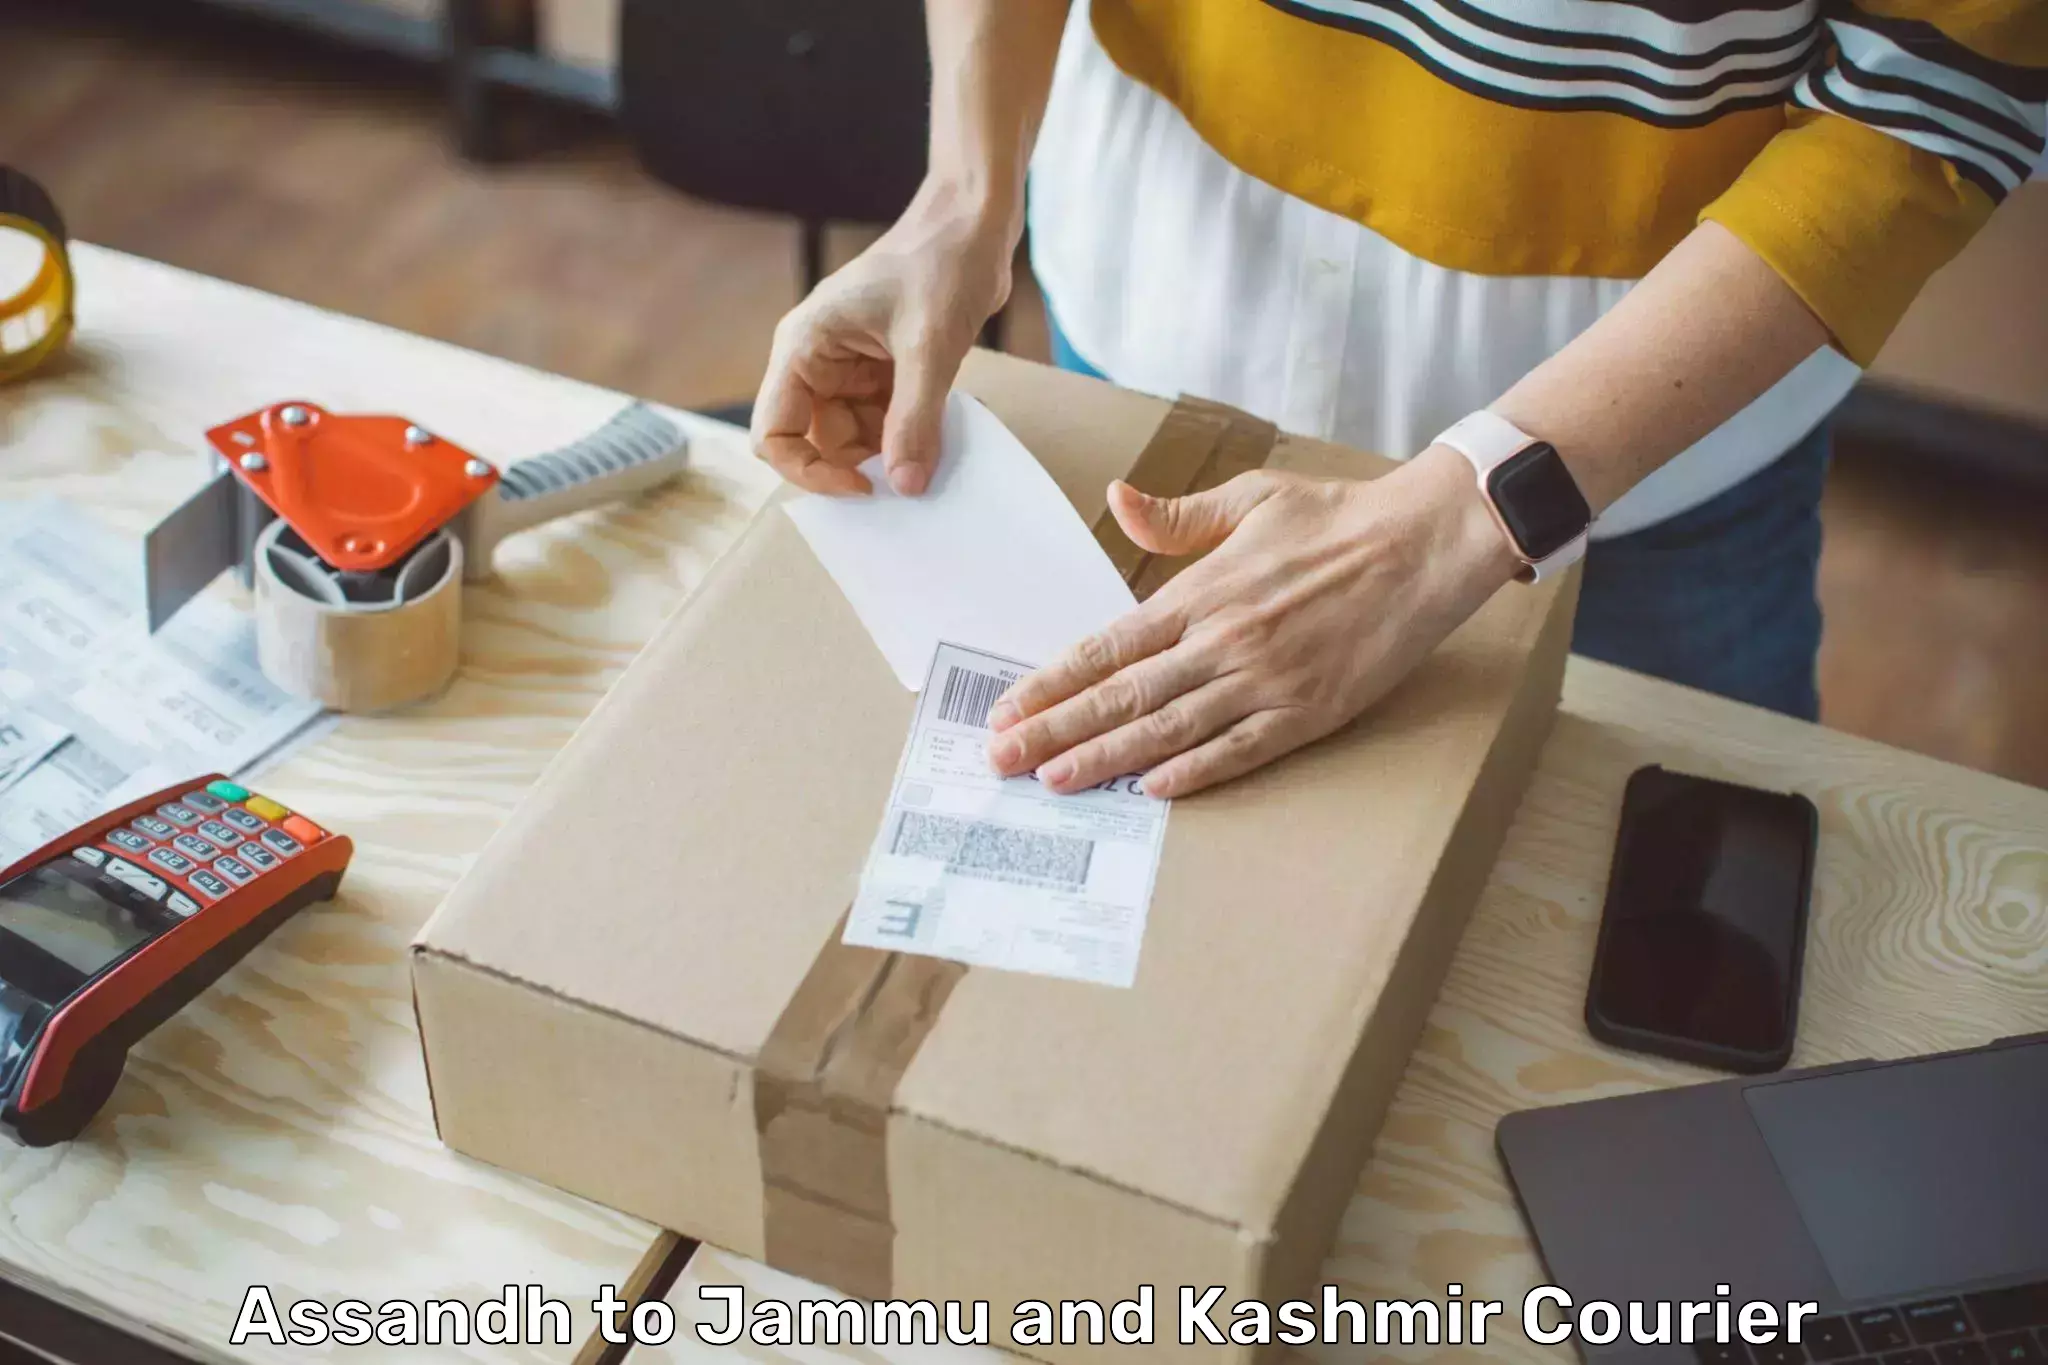 Customizable delivery plans Assandh to Srinagar Kashmir